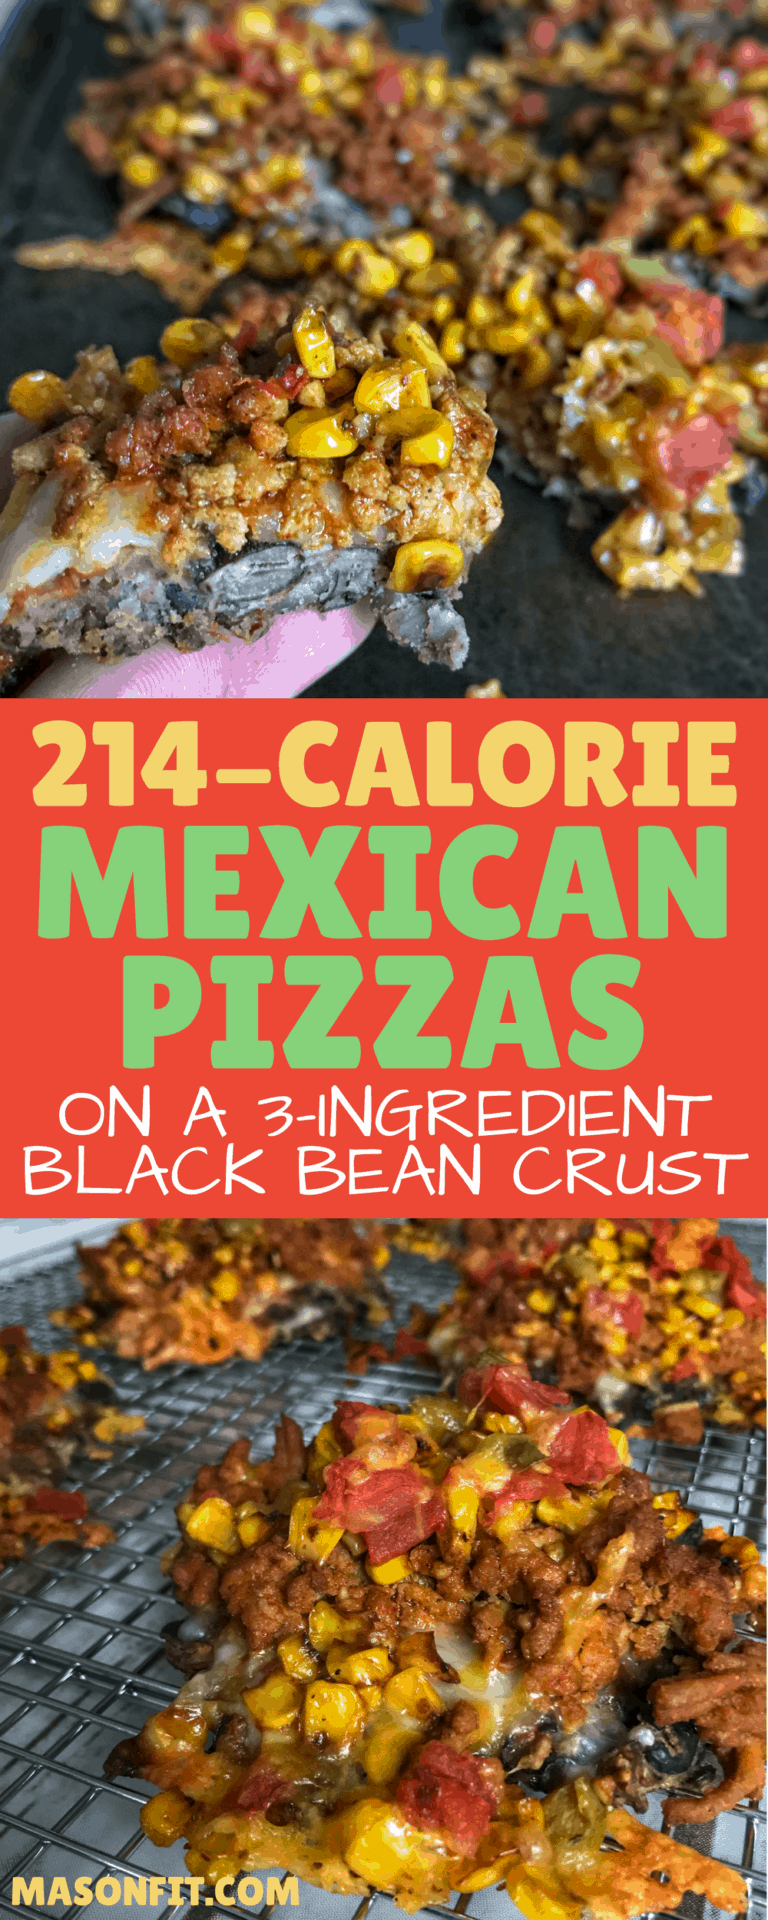 Black Bean Pizza Crust and 214-Calorie Mini Mexican Pizzas